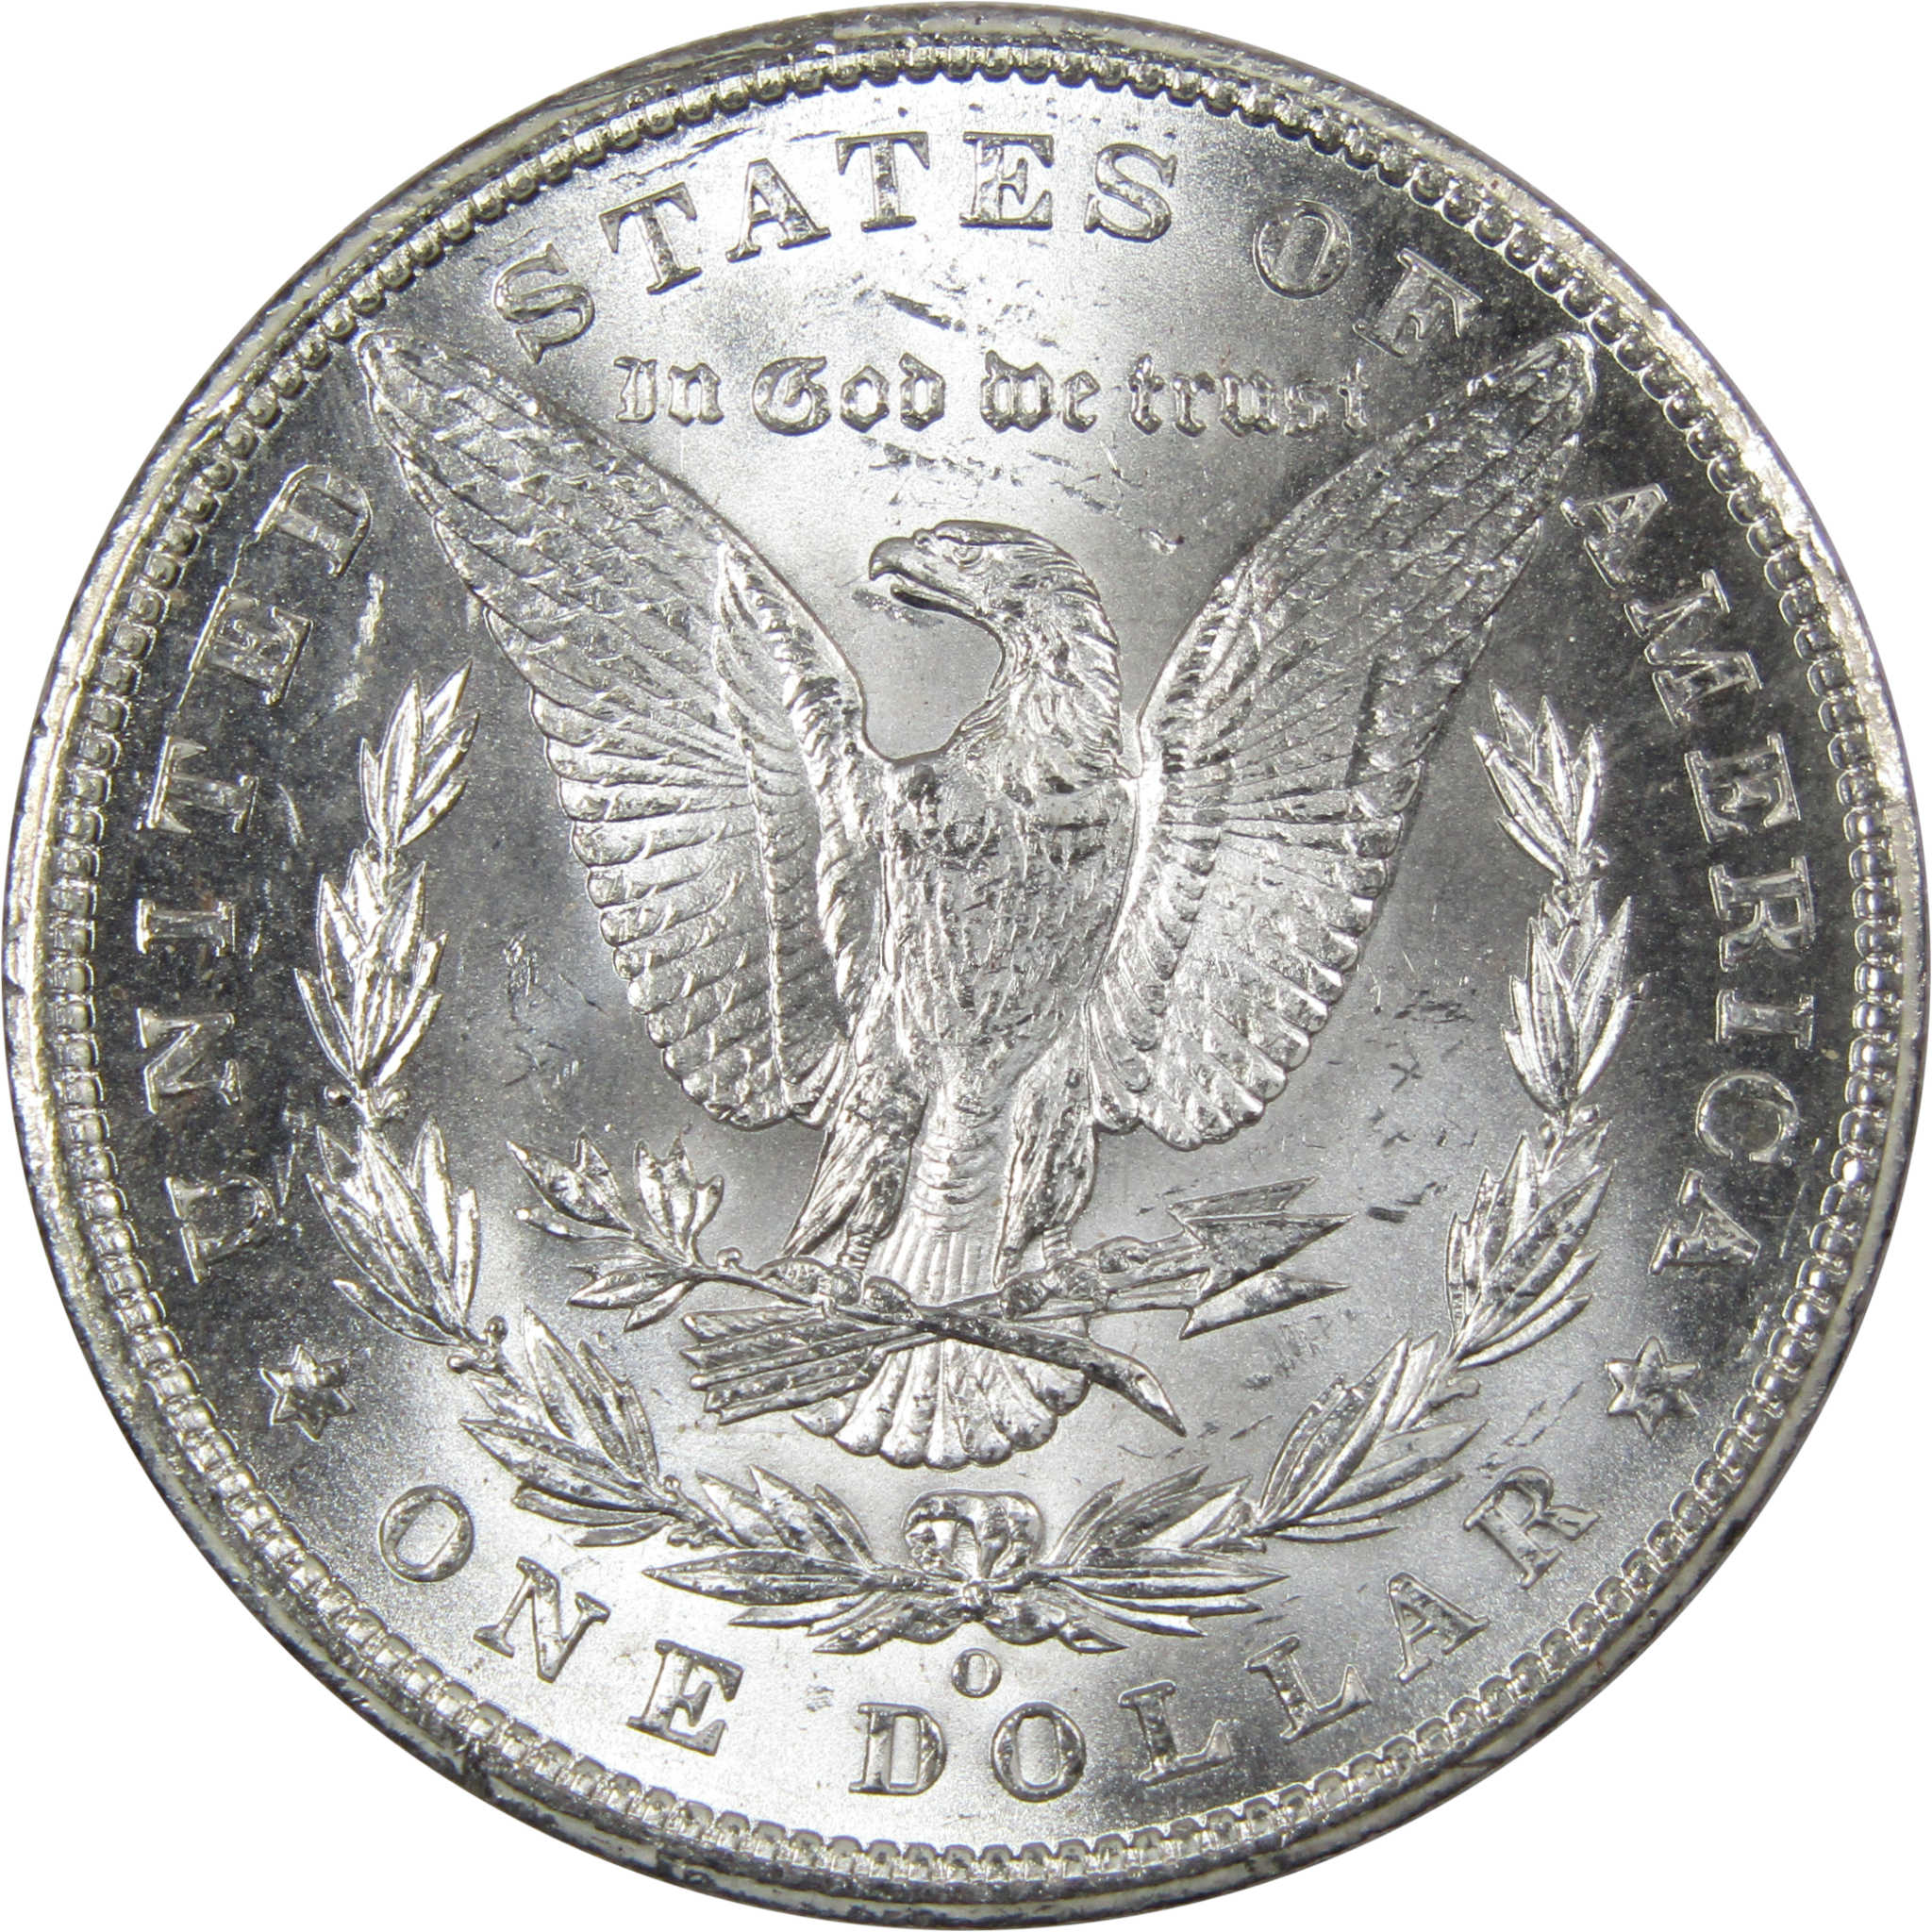 1900 O Morgan Dollar BU Uncirculated Mint State 90% Silver SKU:IPC9737 - Morgan coin - Morgan silver dollar - Morgan silver dollar for sale - Profile Coins &amp; Collectibles